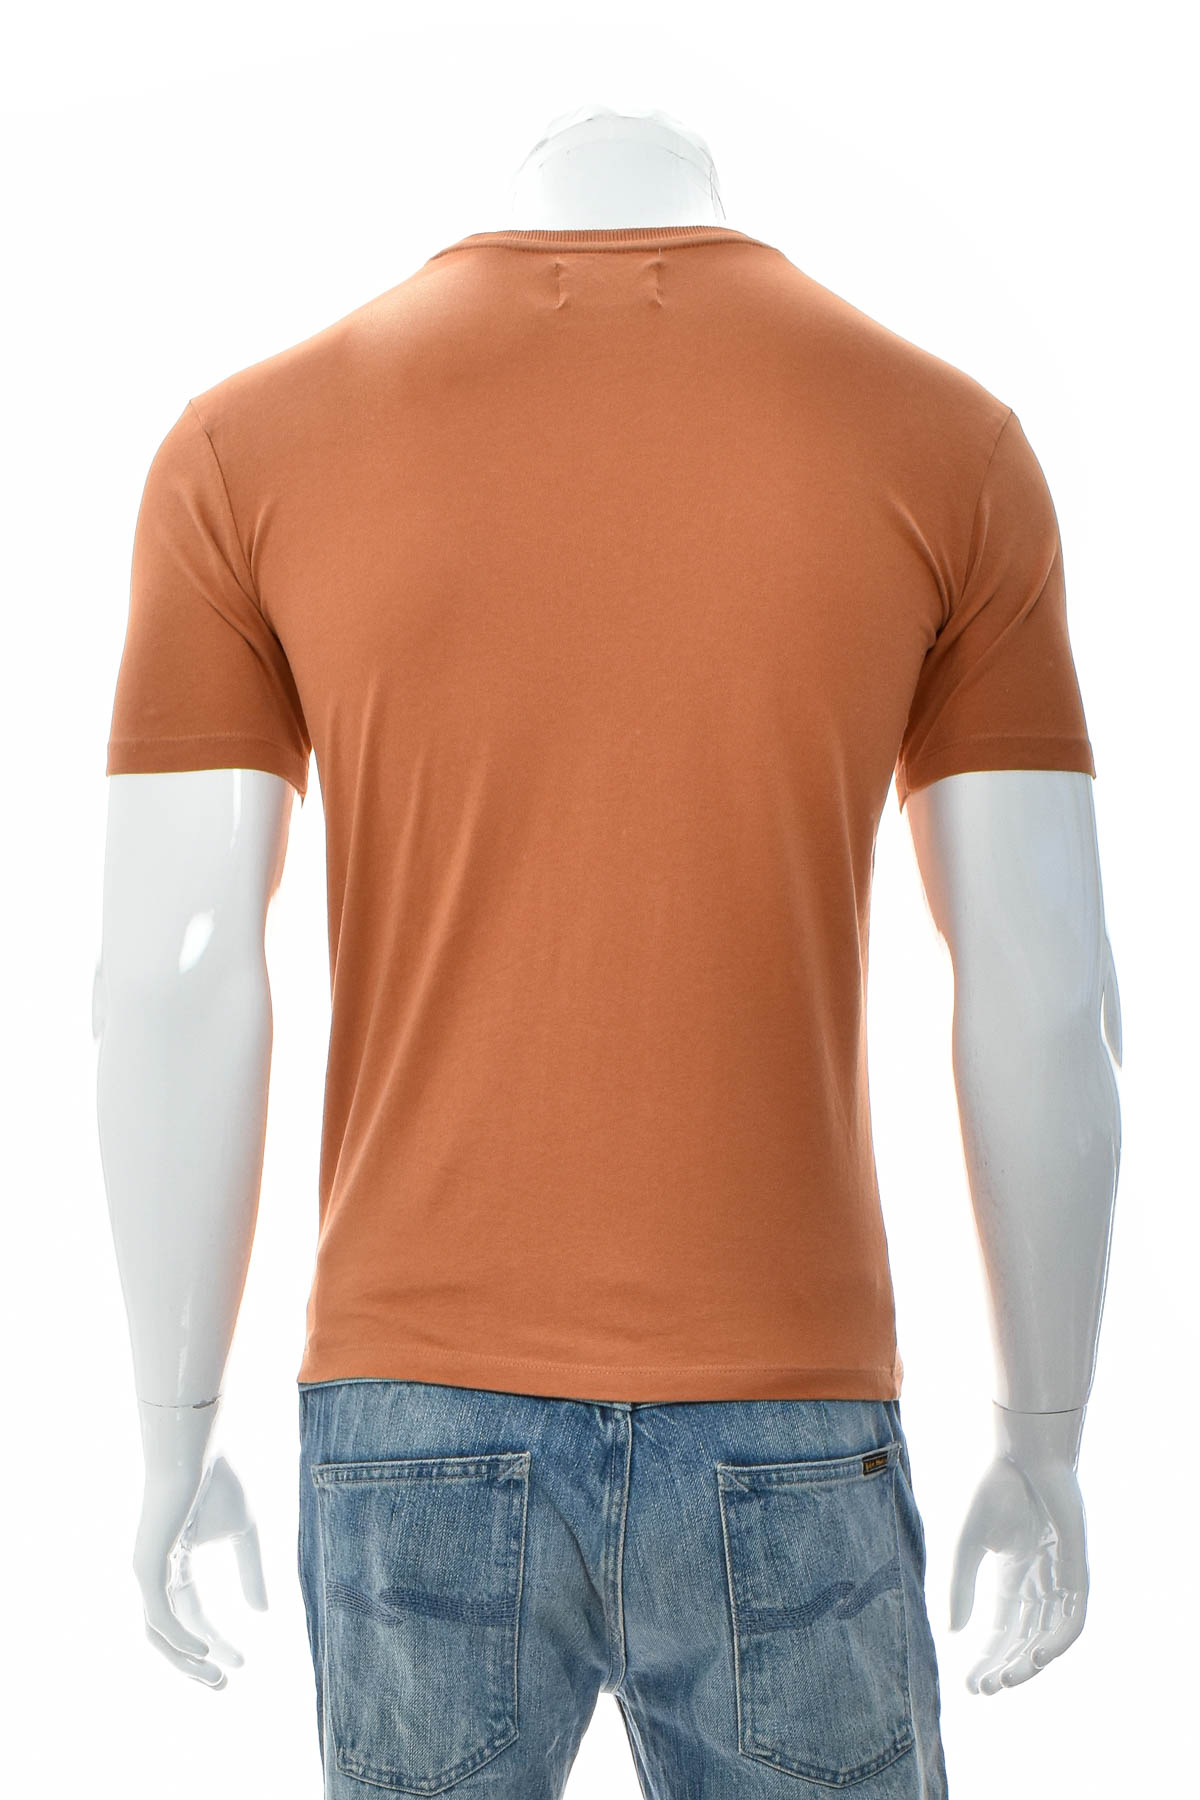 Men's T-shirt - RESERVED - 1